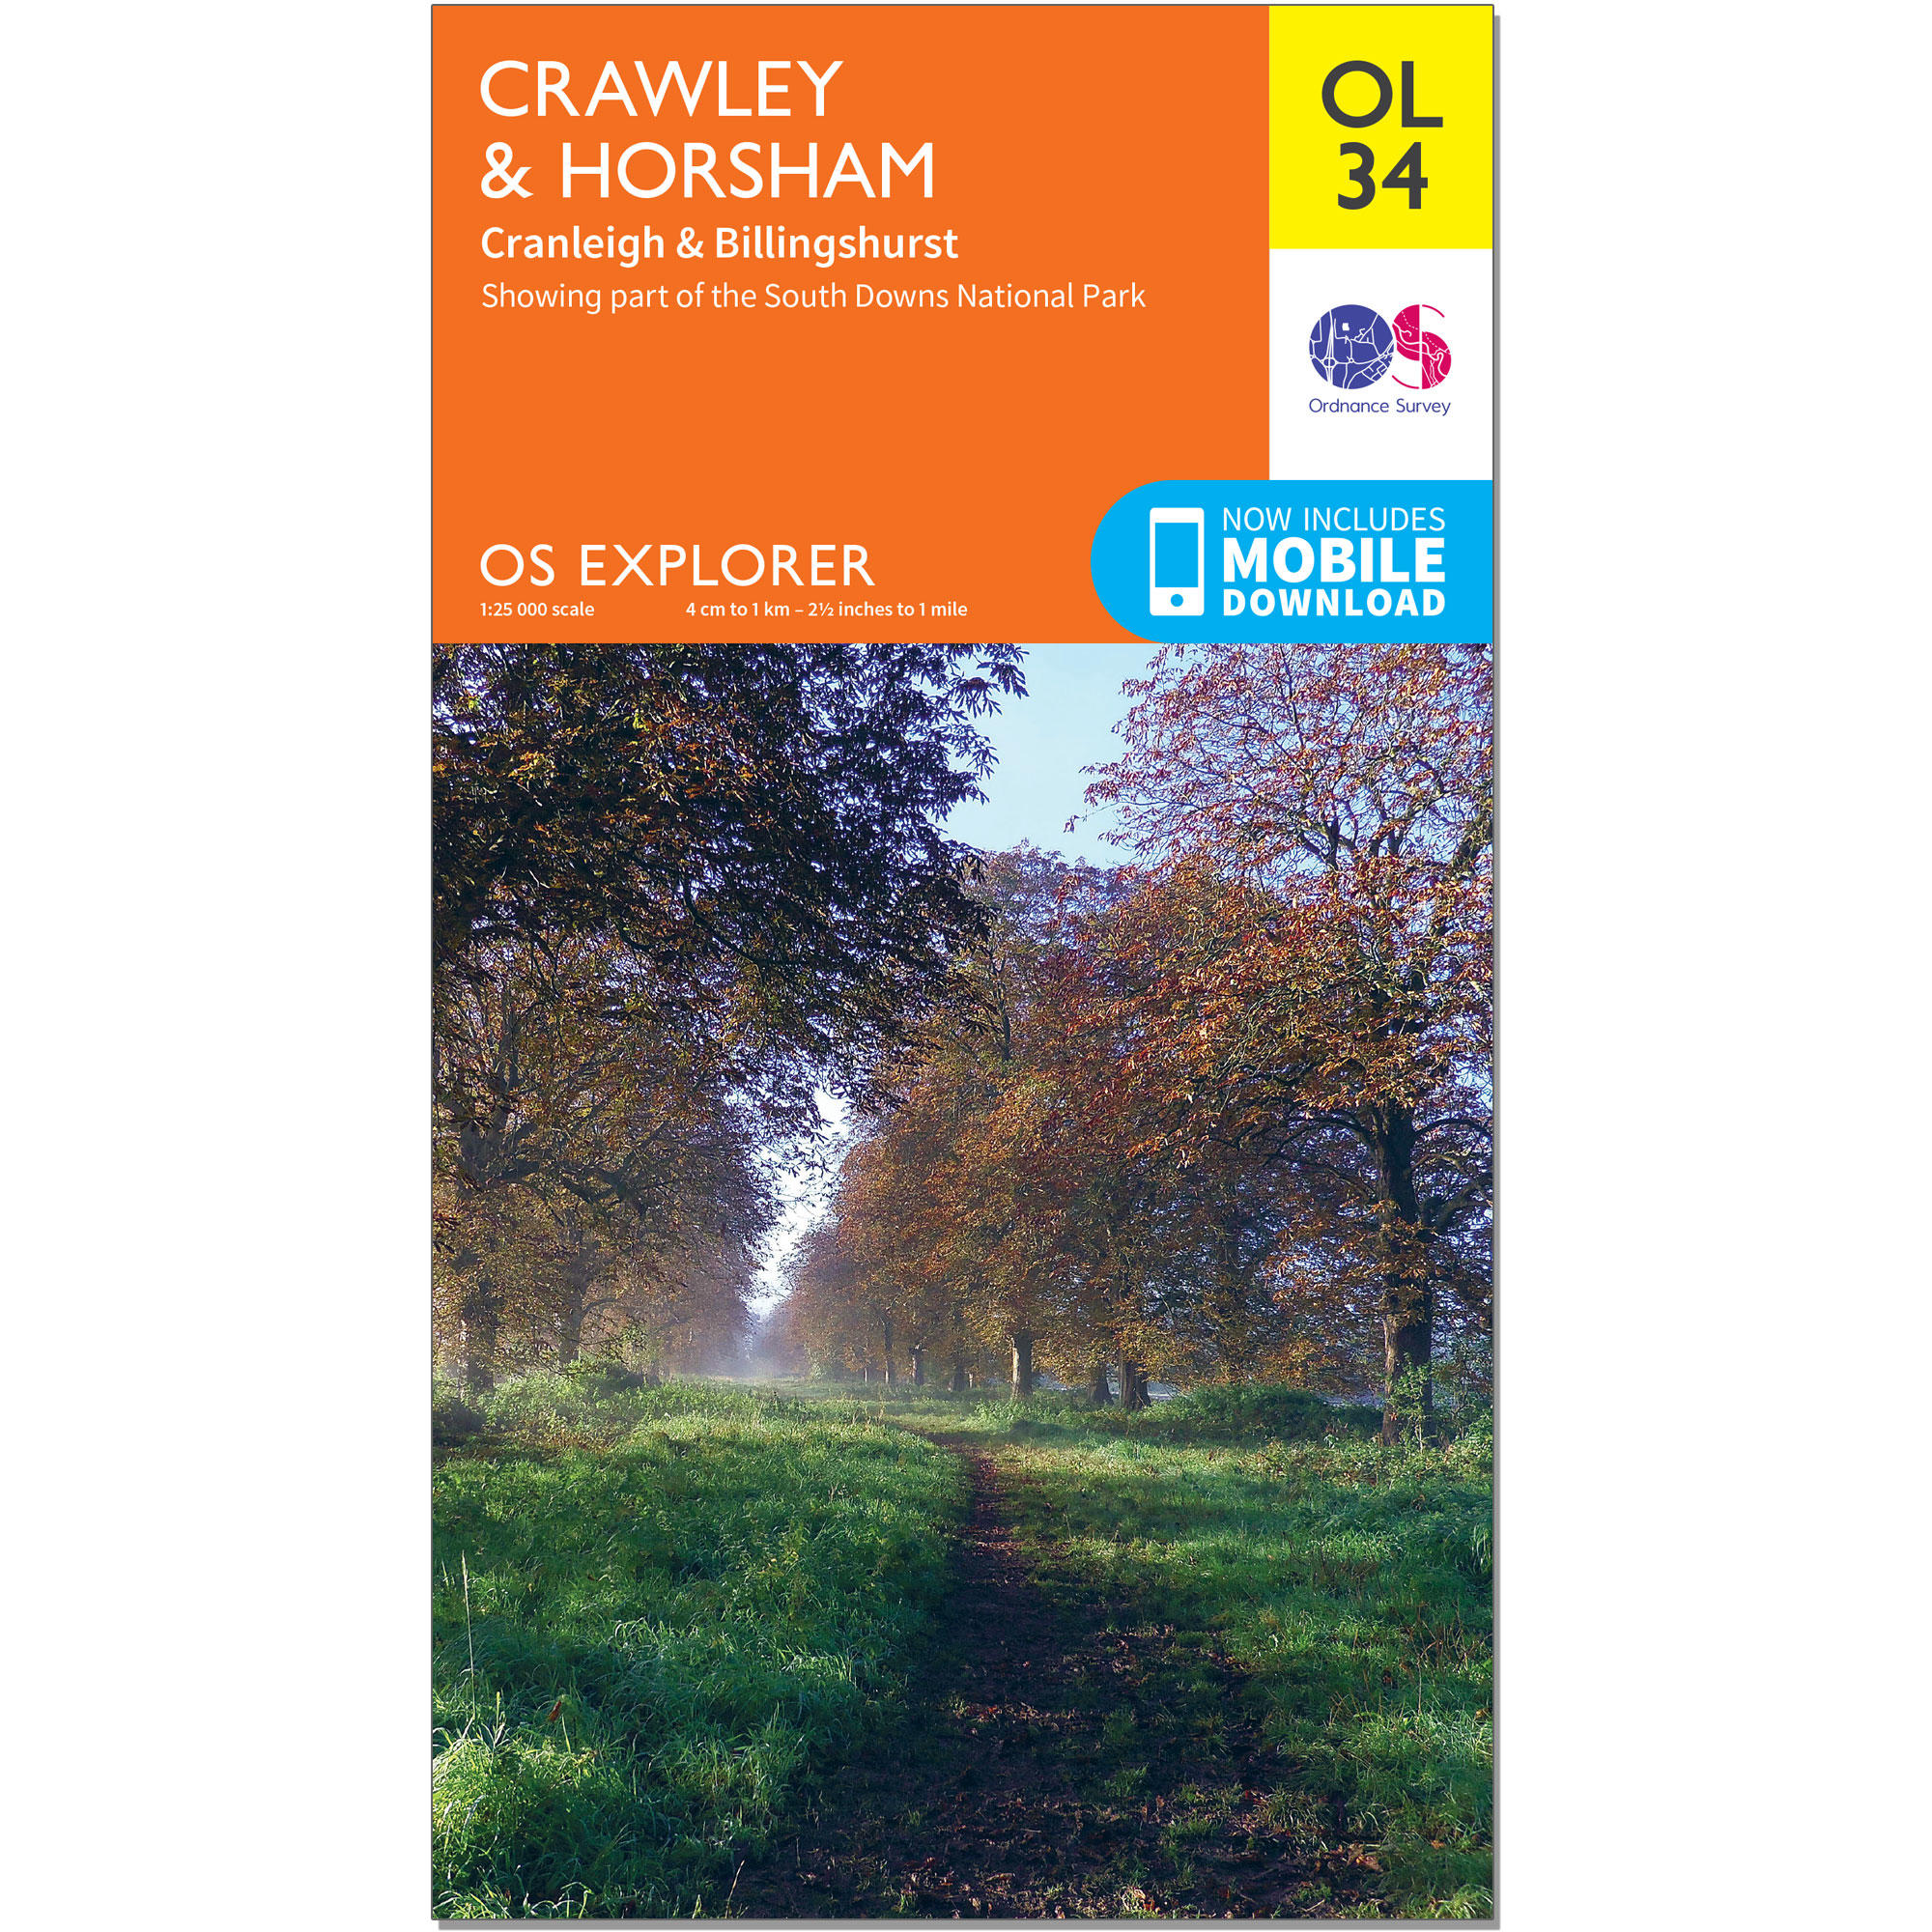 OS Explorer Leisure Map - Crawley & Horsham 1/2